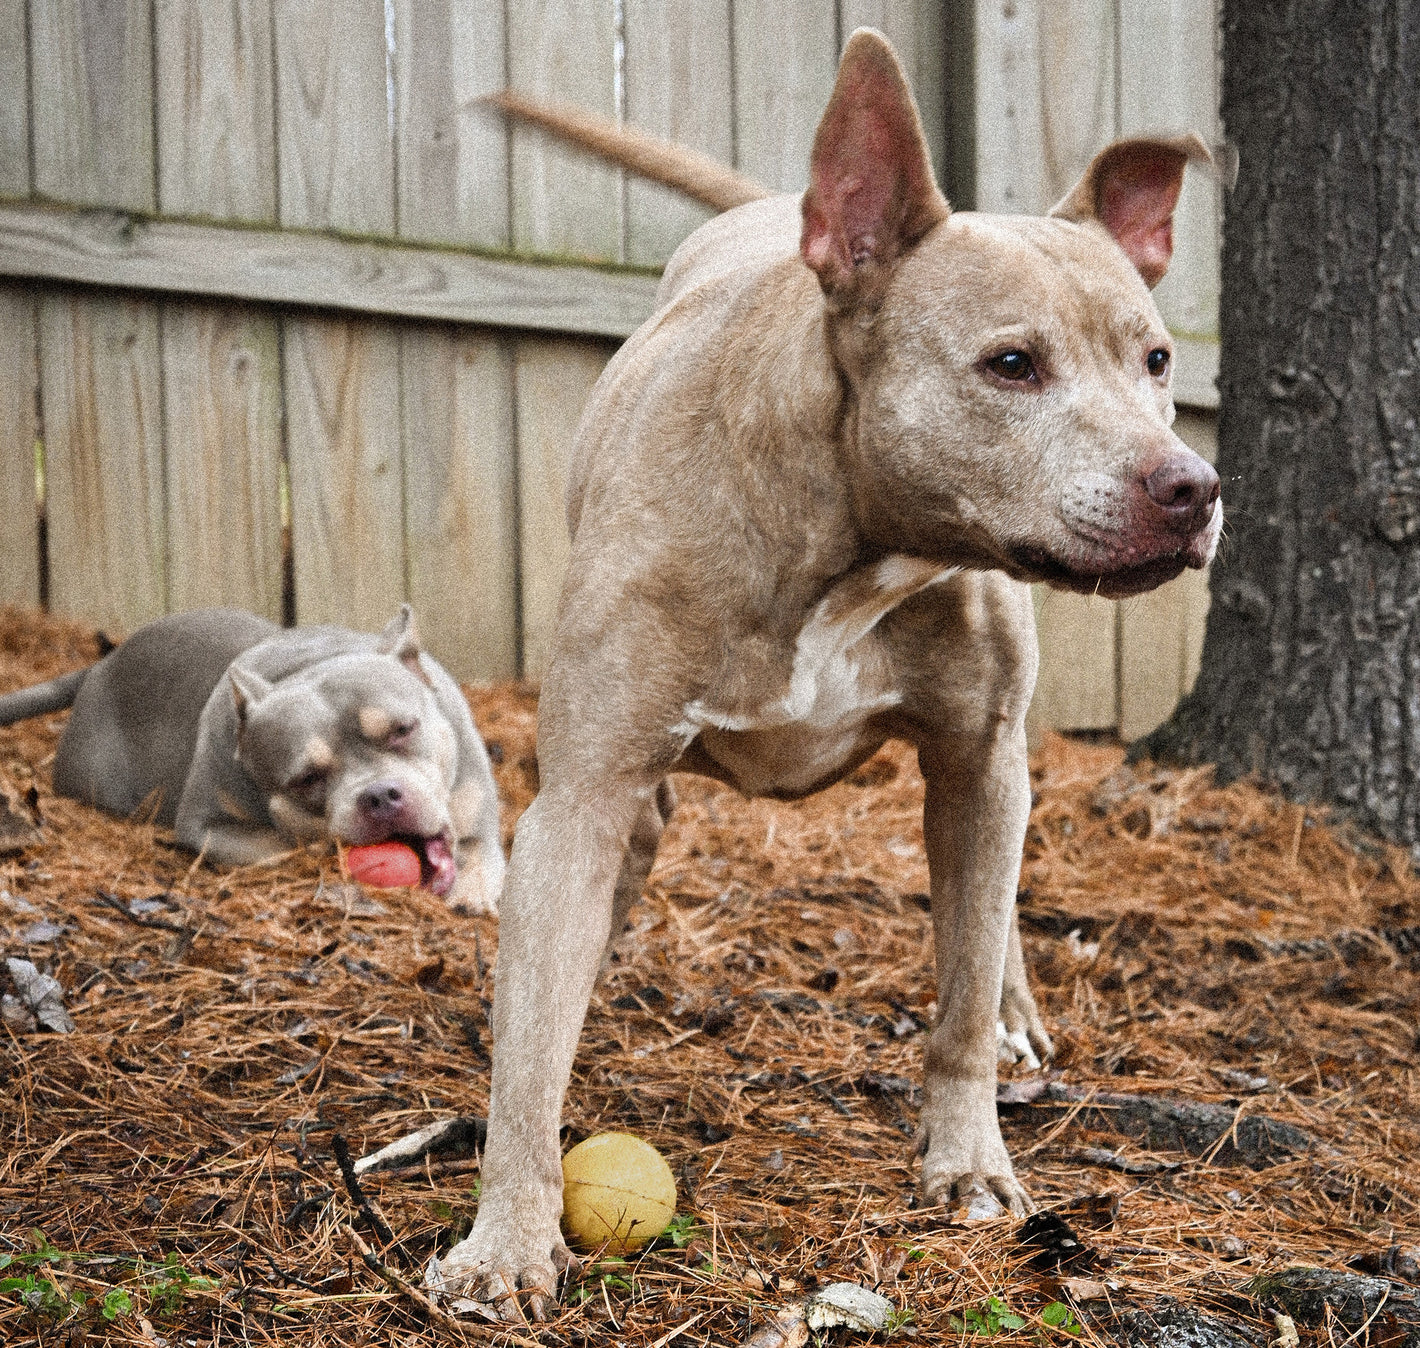 Pitbull With Fetch Boy Dog Toy Rubber Ball in Backyard